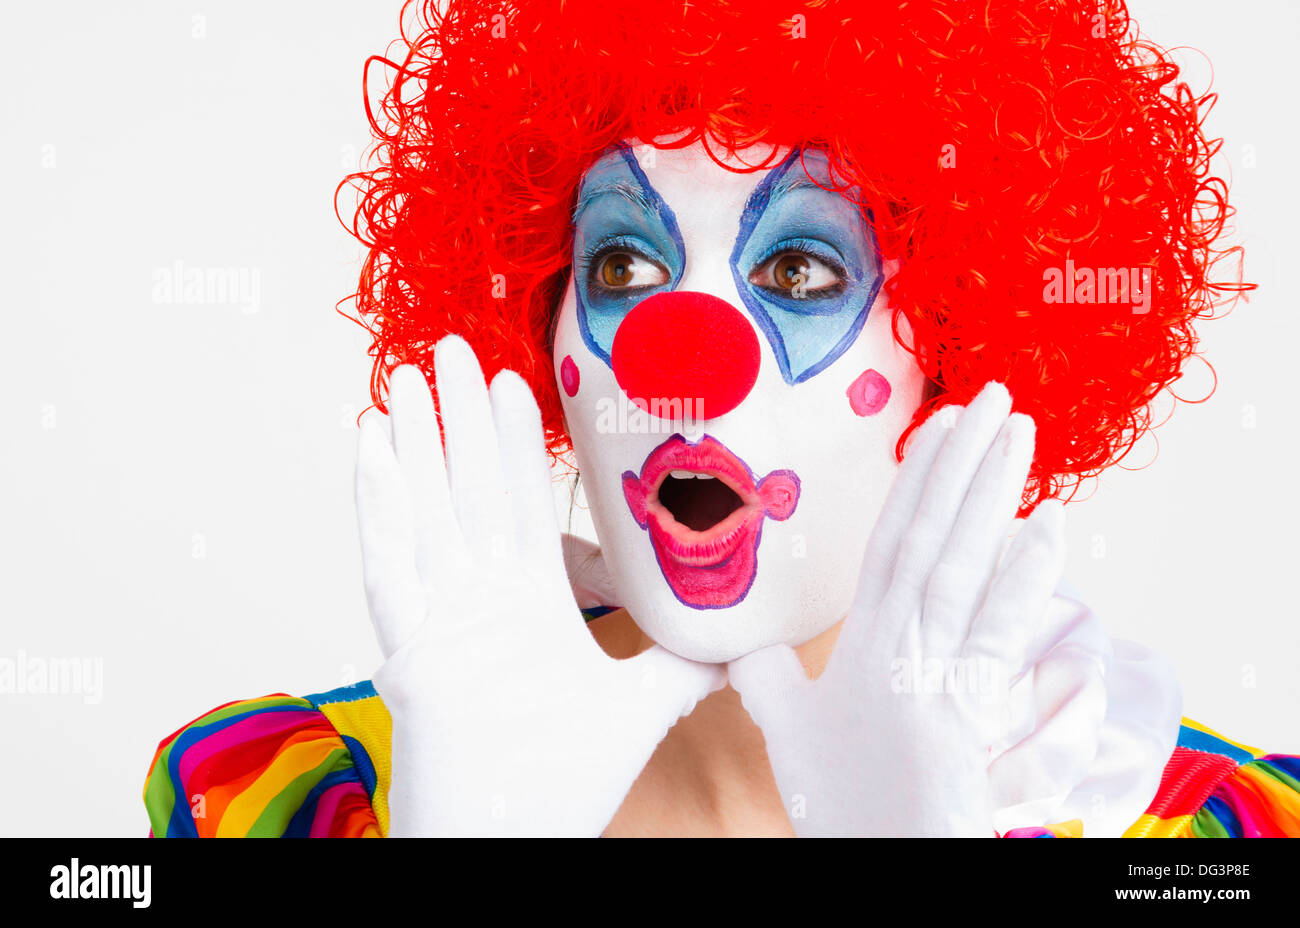 Female Clown entertainer working her routine Stock Photo